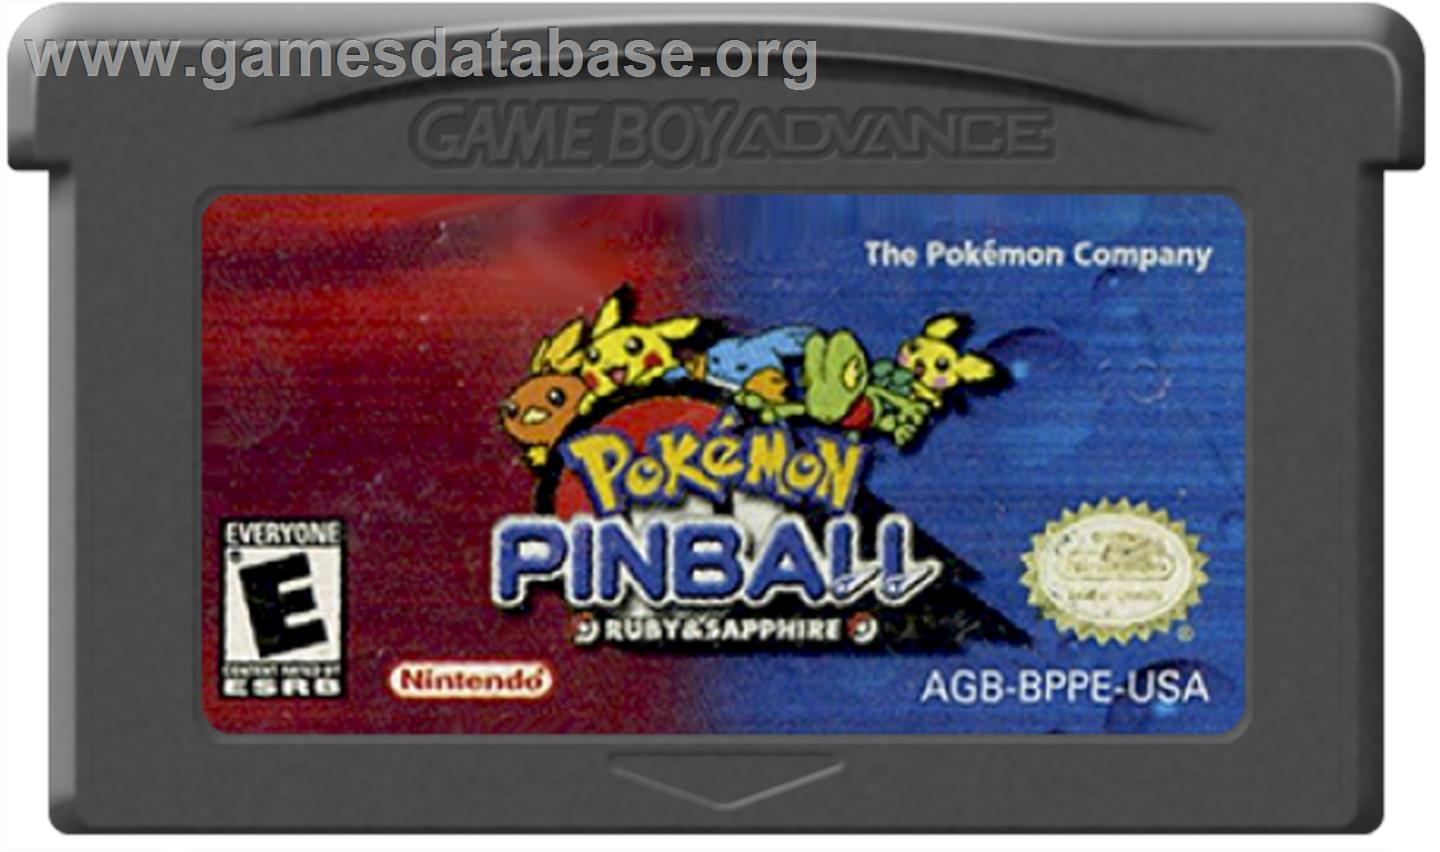 Pokemon Pinball: Ruby & Sapphire - Nintendo Game Boy Advance - Artwork - Cartridge